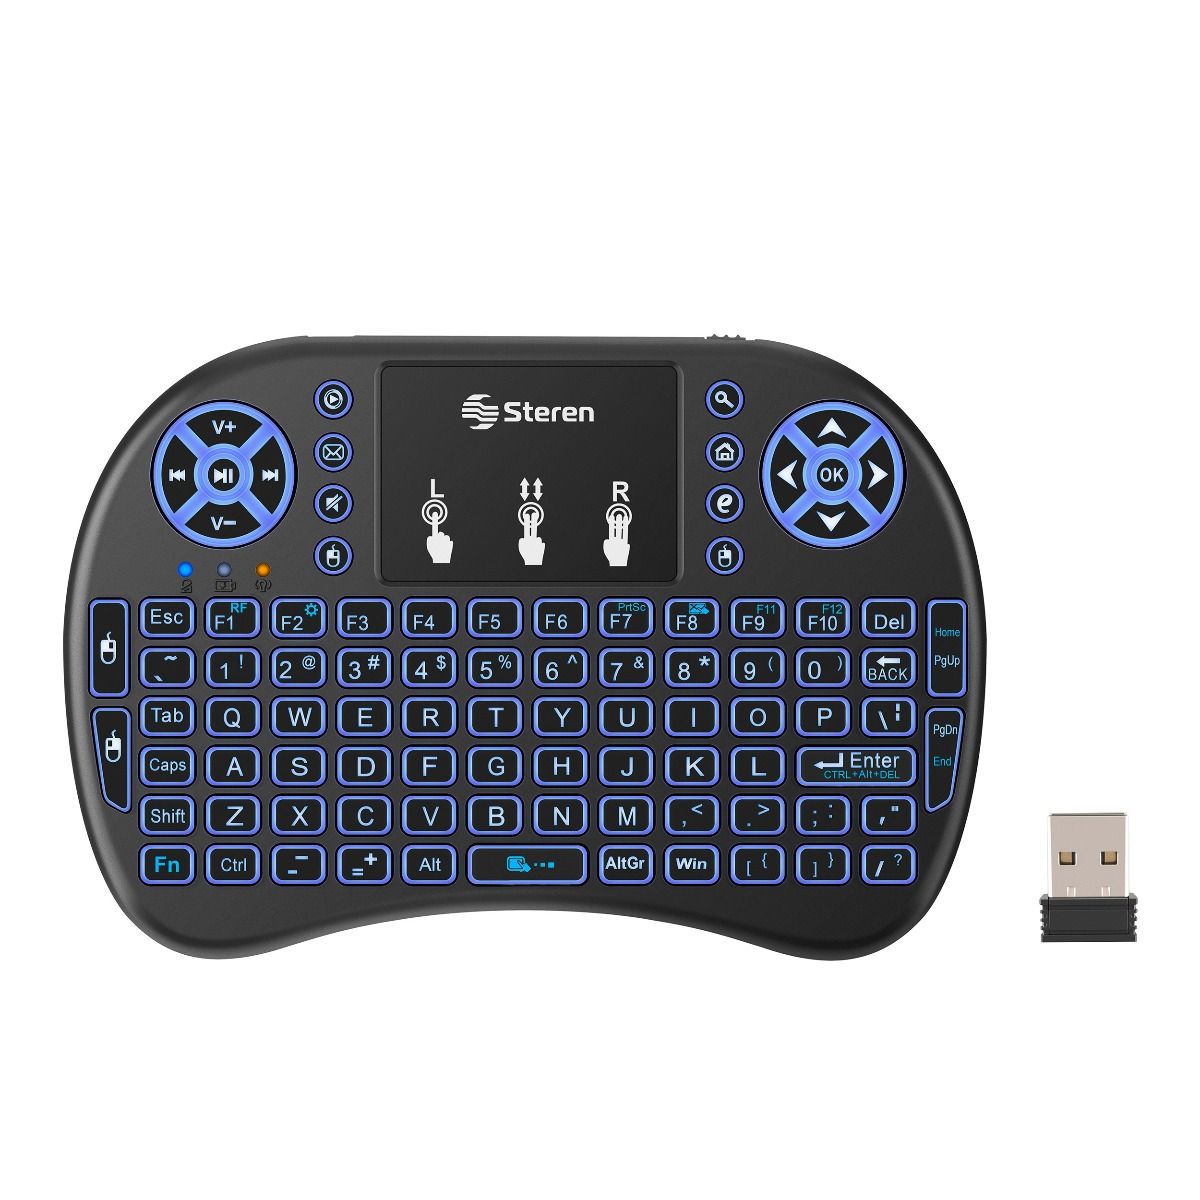 Teclado Bluetooth multidispositivo, teclado inalámbrico recargable portátil  con ranura de soporte interruptor a 2 dispositivos para iPad, tableta